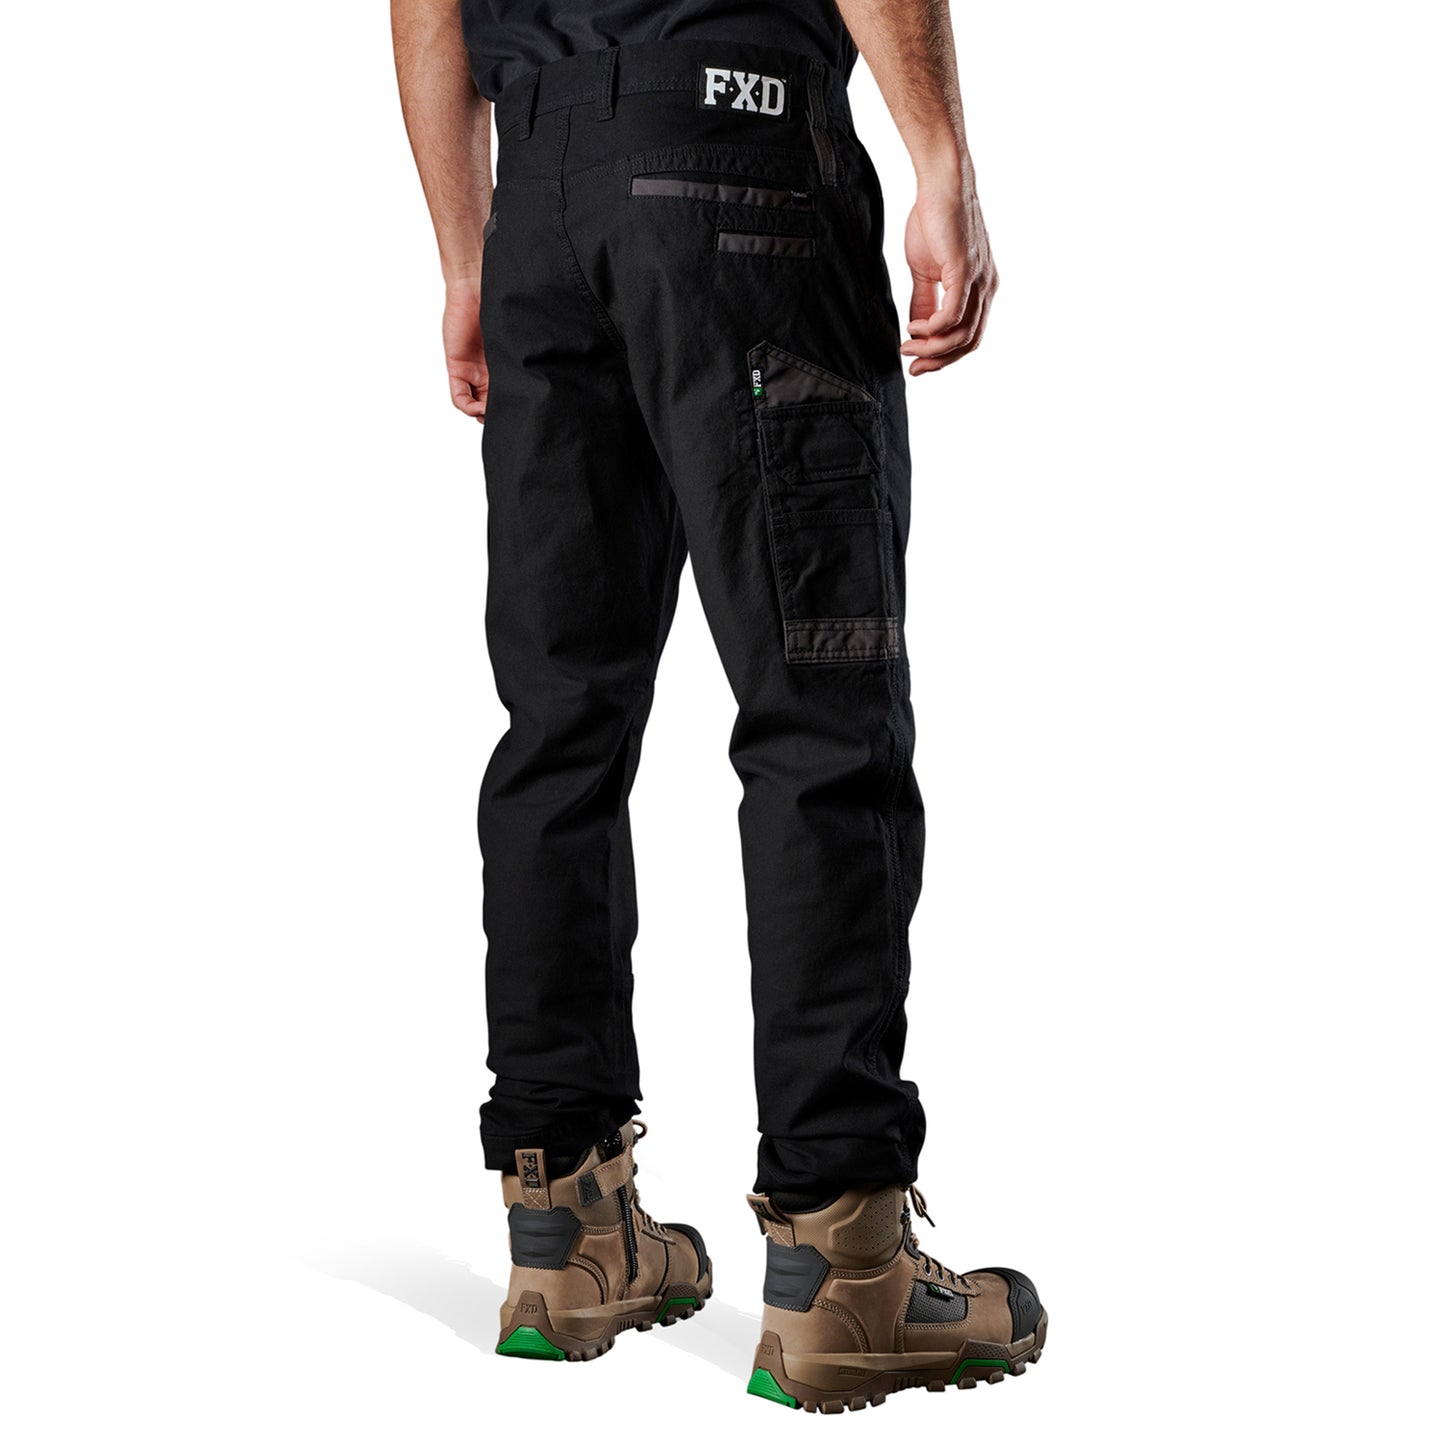 FXD - WP3 Stretch Work Pants (Black)